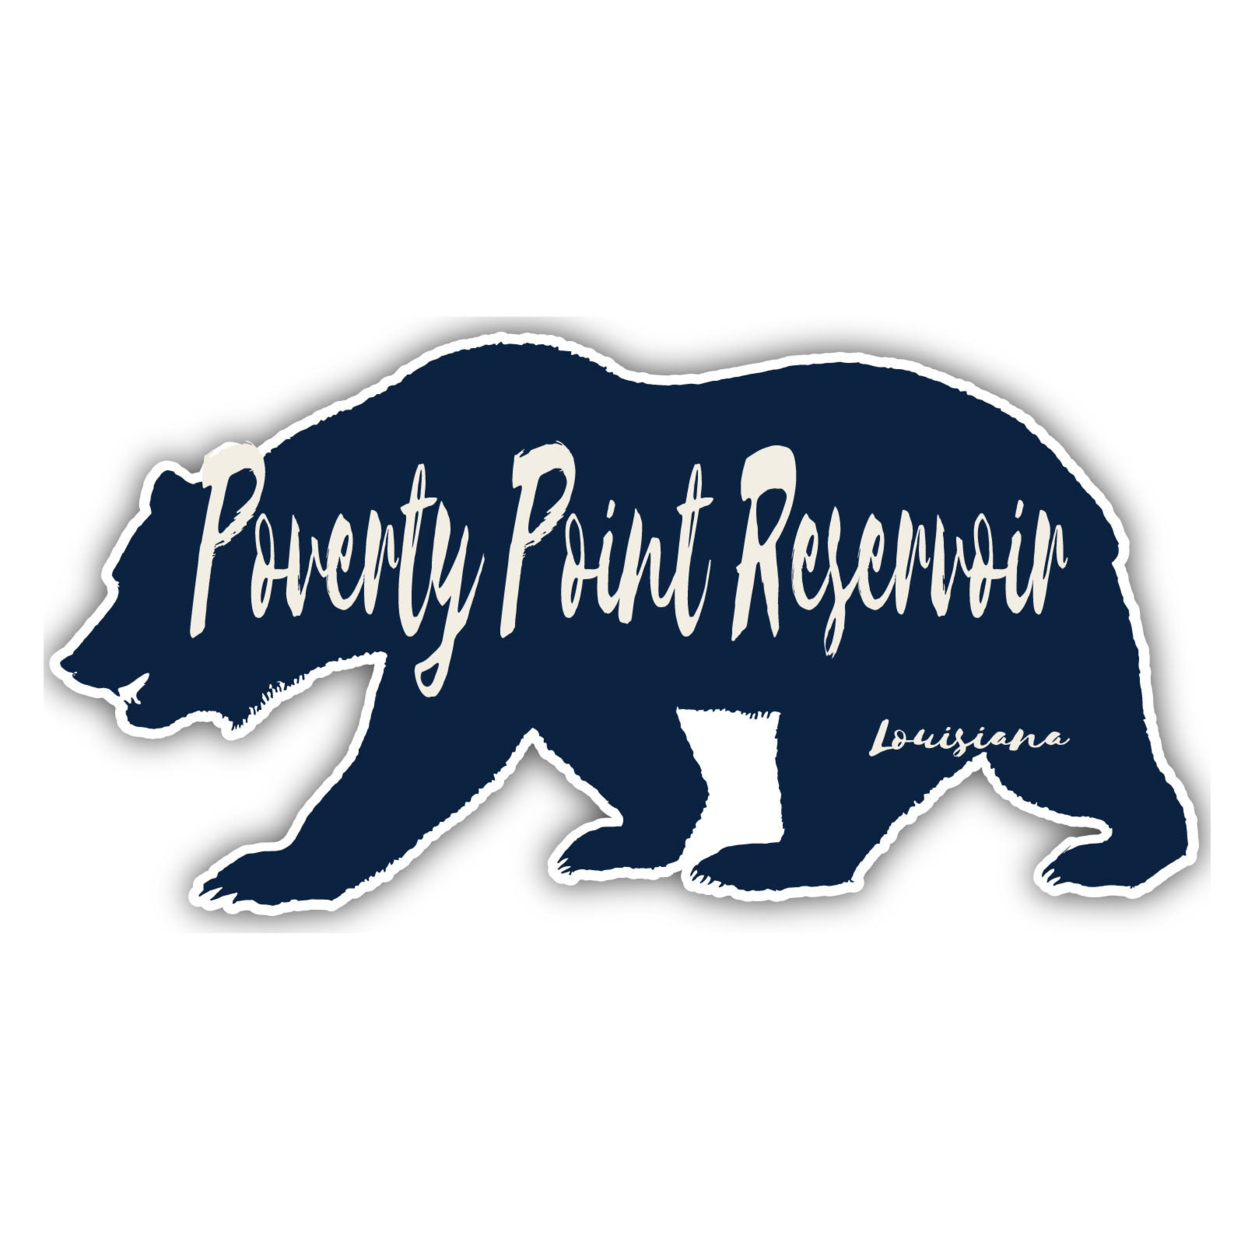 Poverty Point Reservoir Louisiana Souvenir Decorative Stickers (Choose Theme And Size) - Single Unit, 2-Inch, Bear